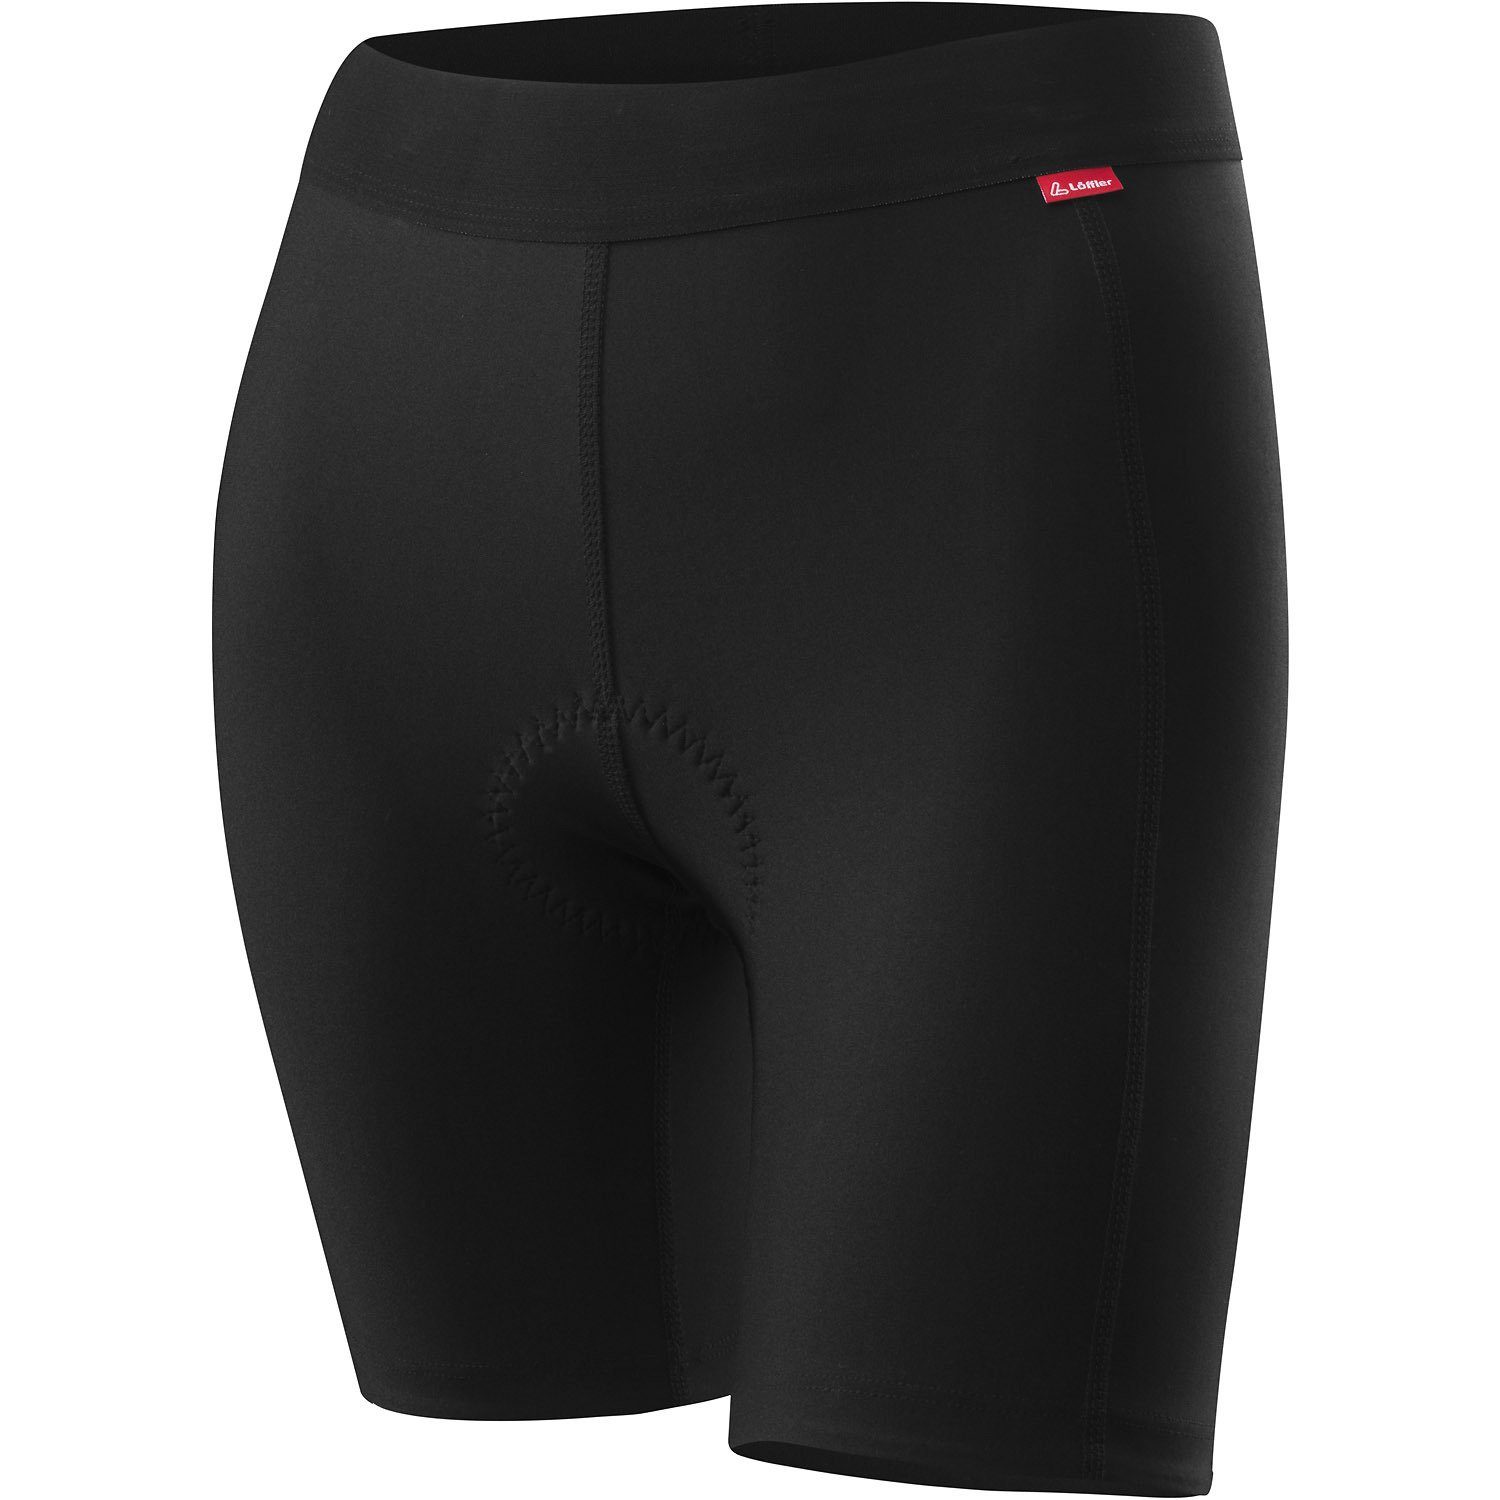 Rad Unterhose Black Löffler Tour Shorts